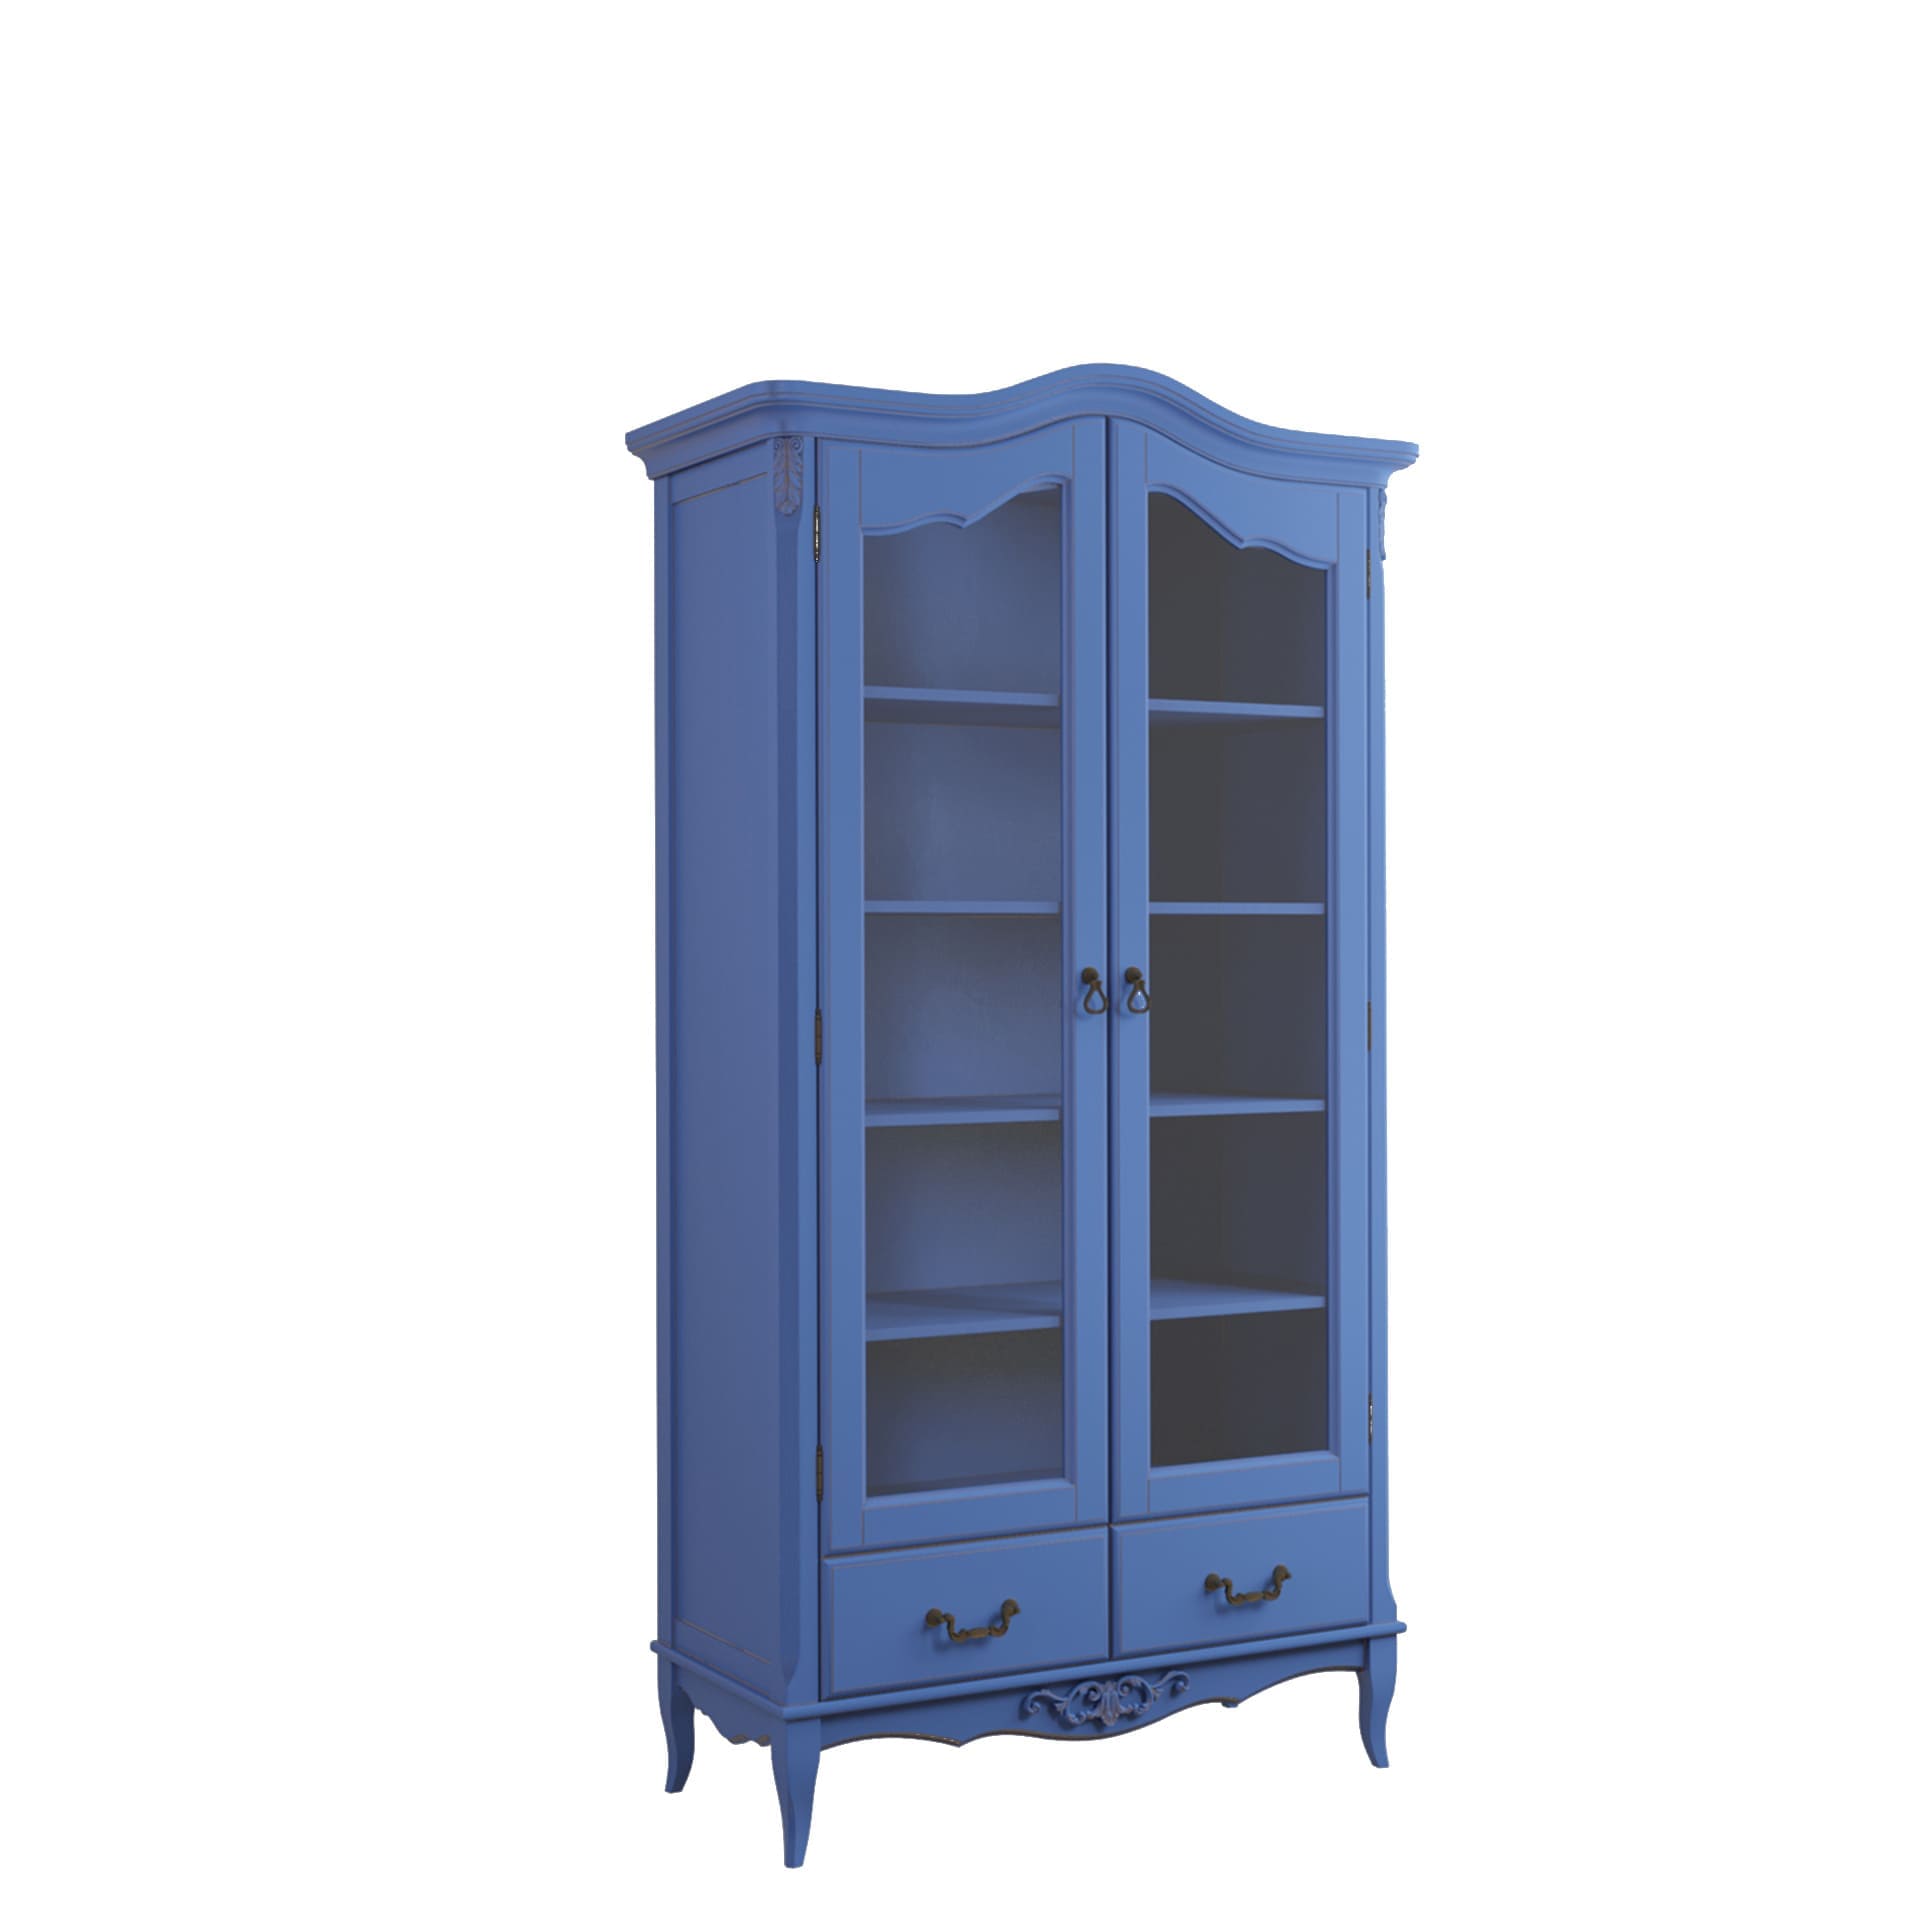 Библиотека Aletan Provence, двухдверная, цвет: синий (B604IN)B604IN